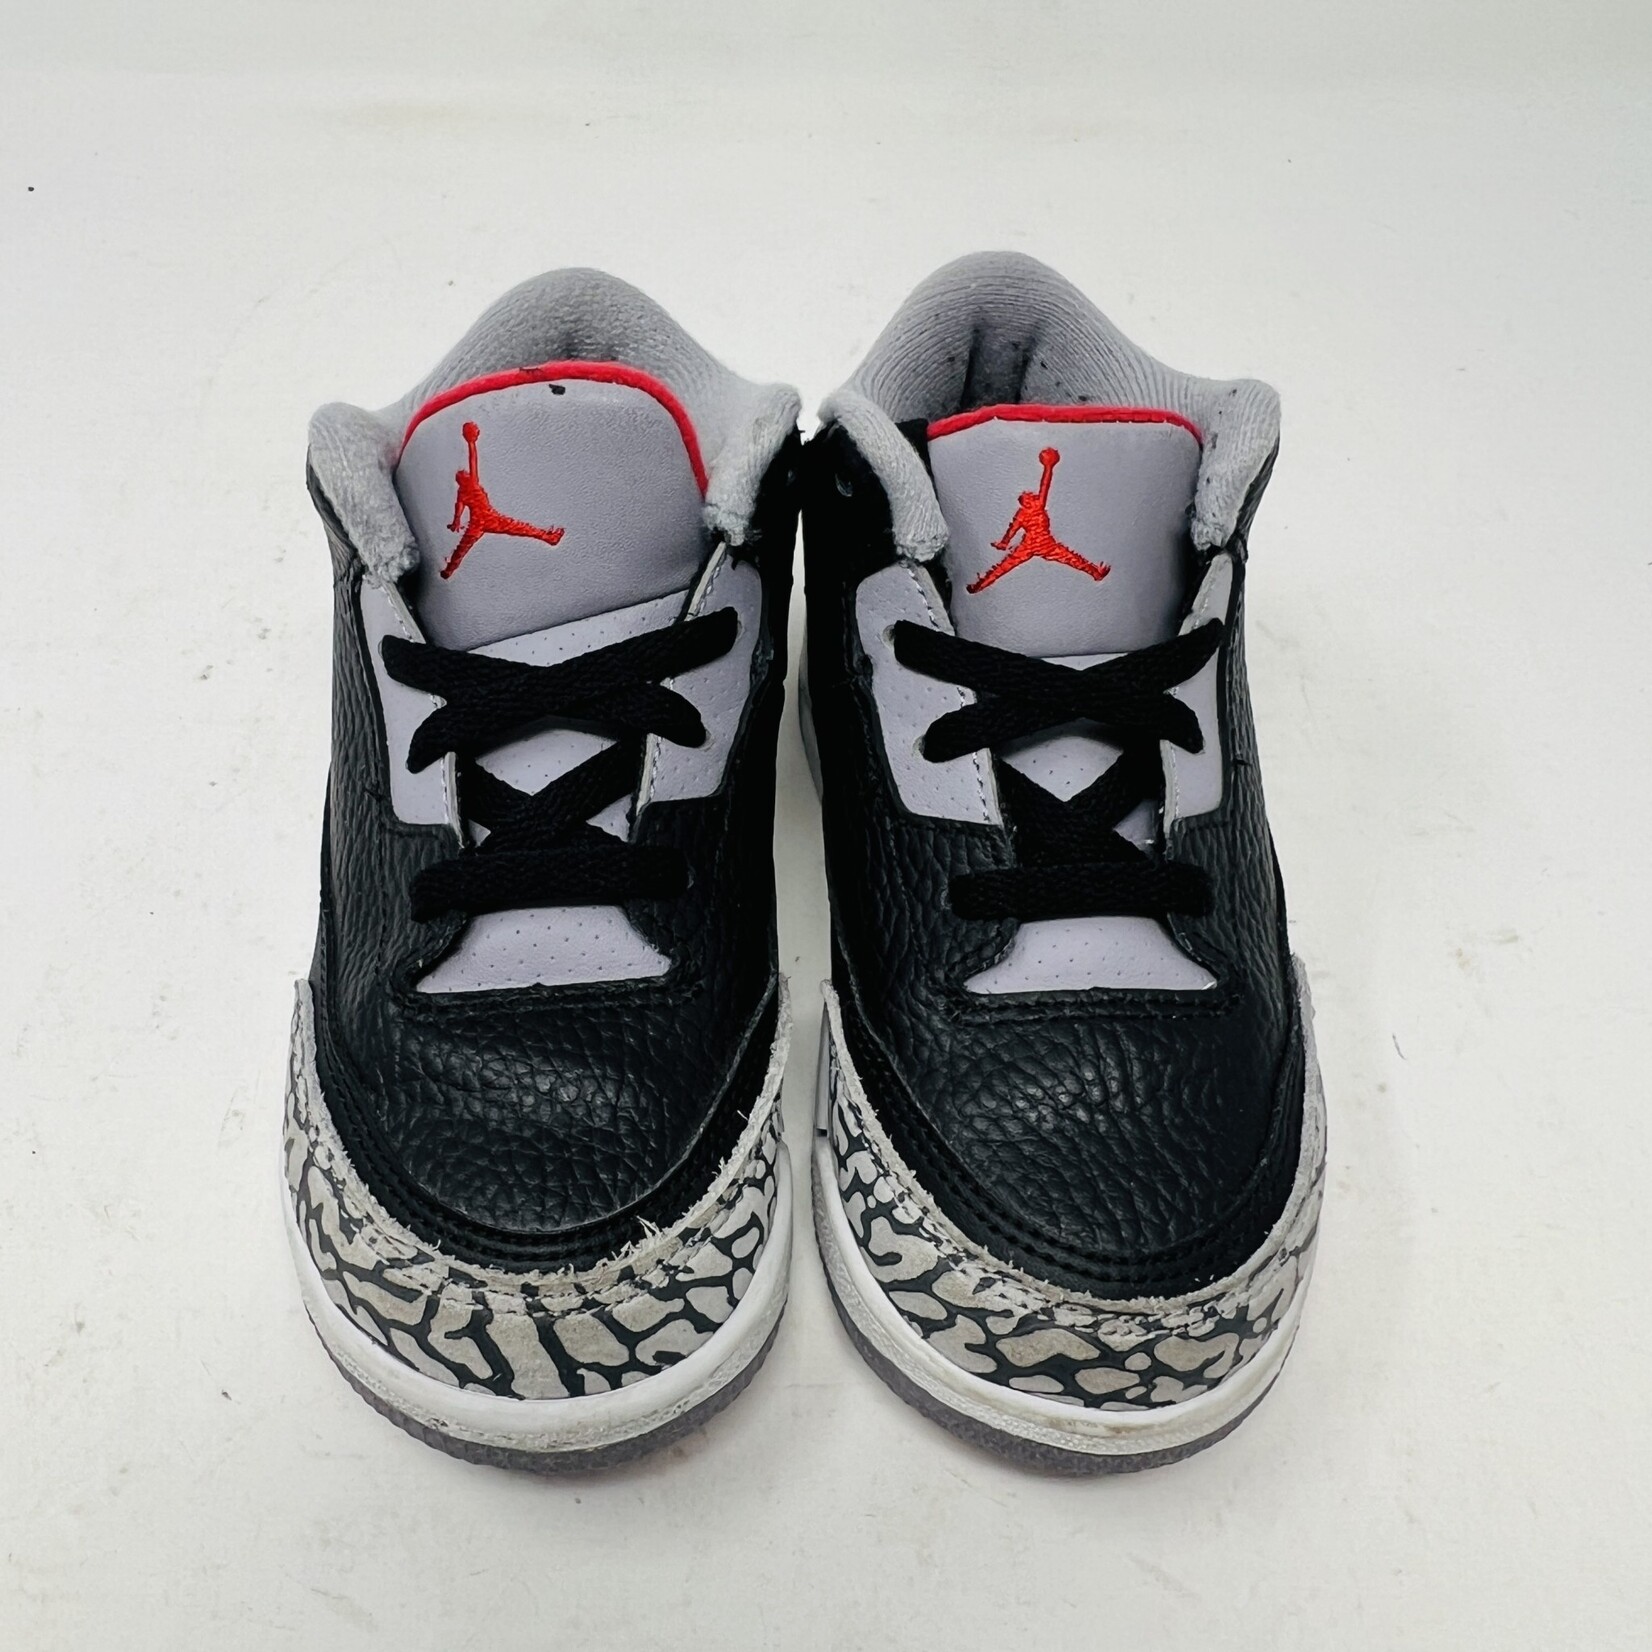 Jordan Jordan 3 Retro Black Cement (2018) (TD)